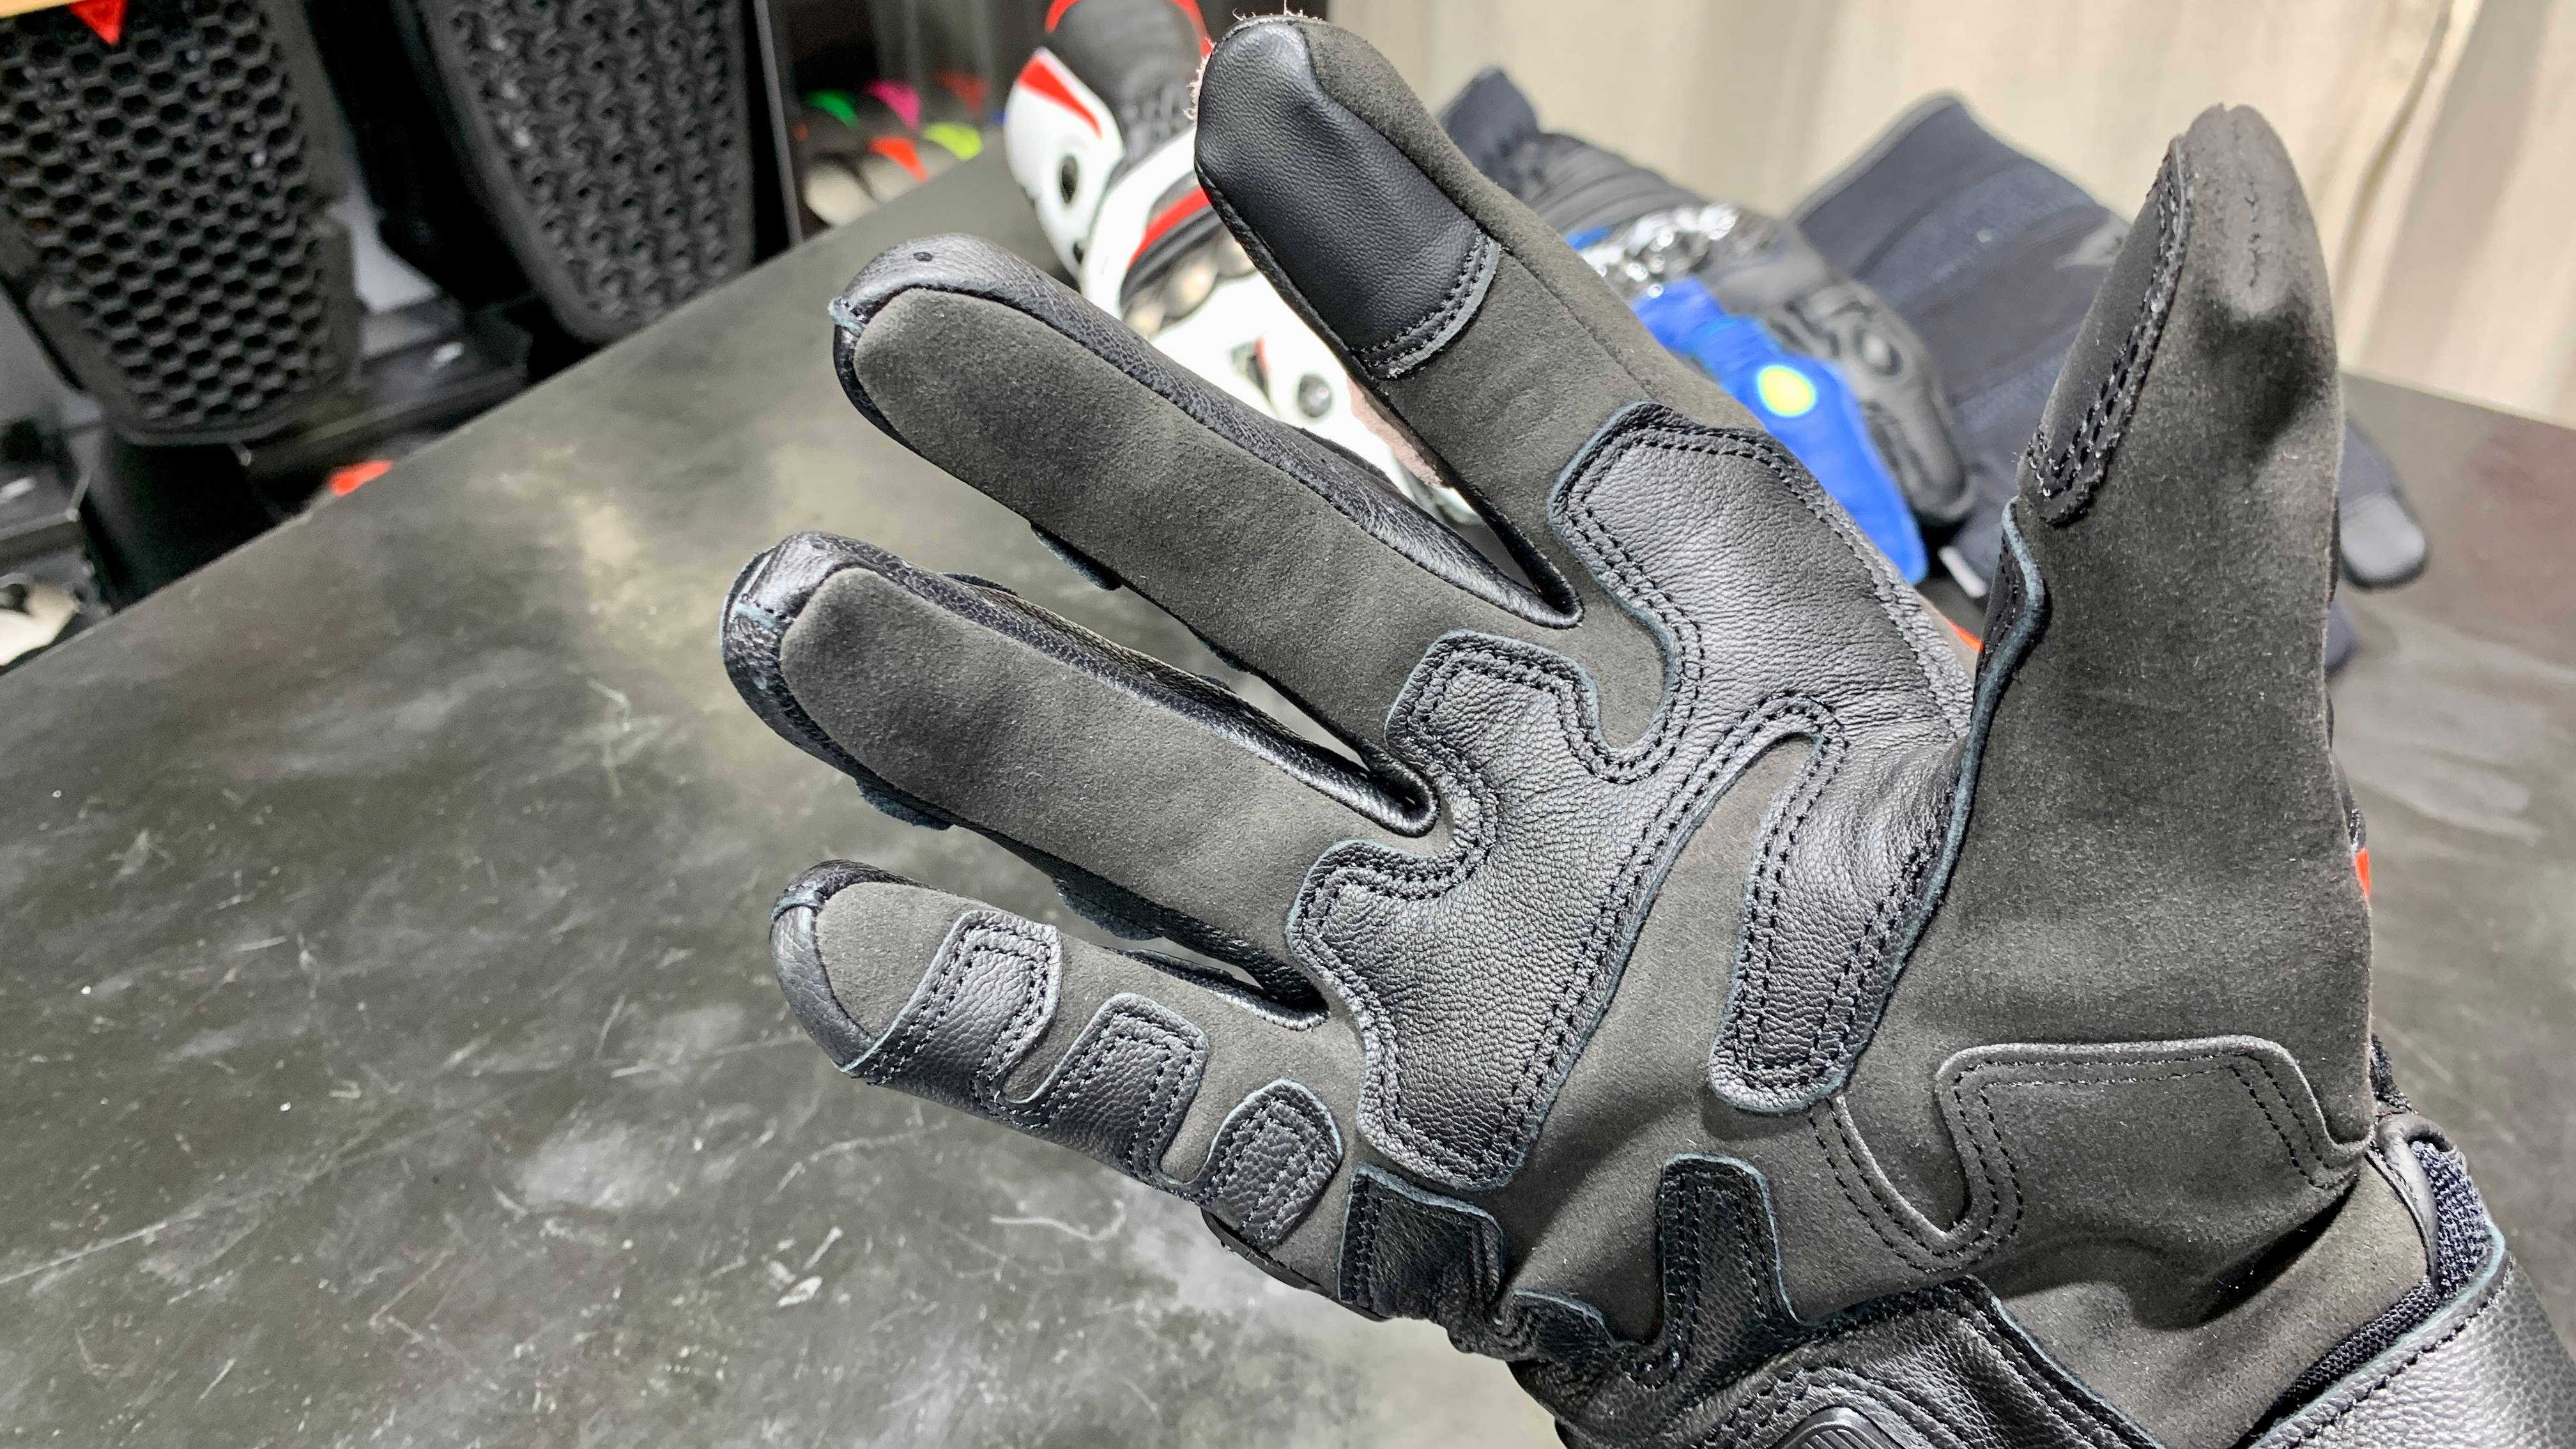 dainese gloves